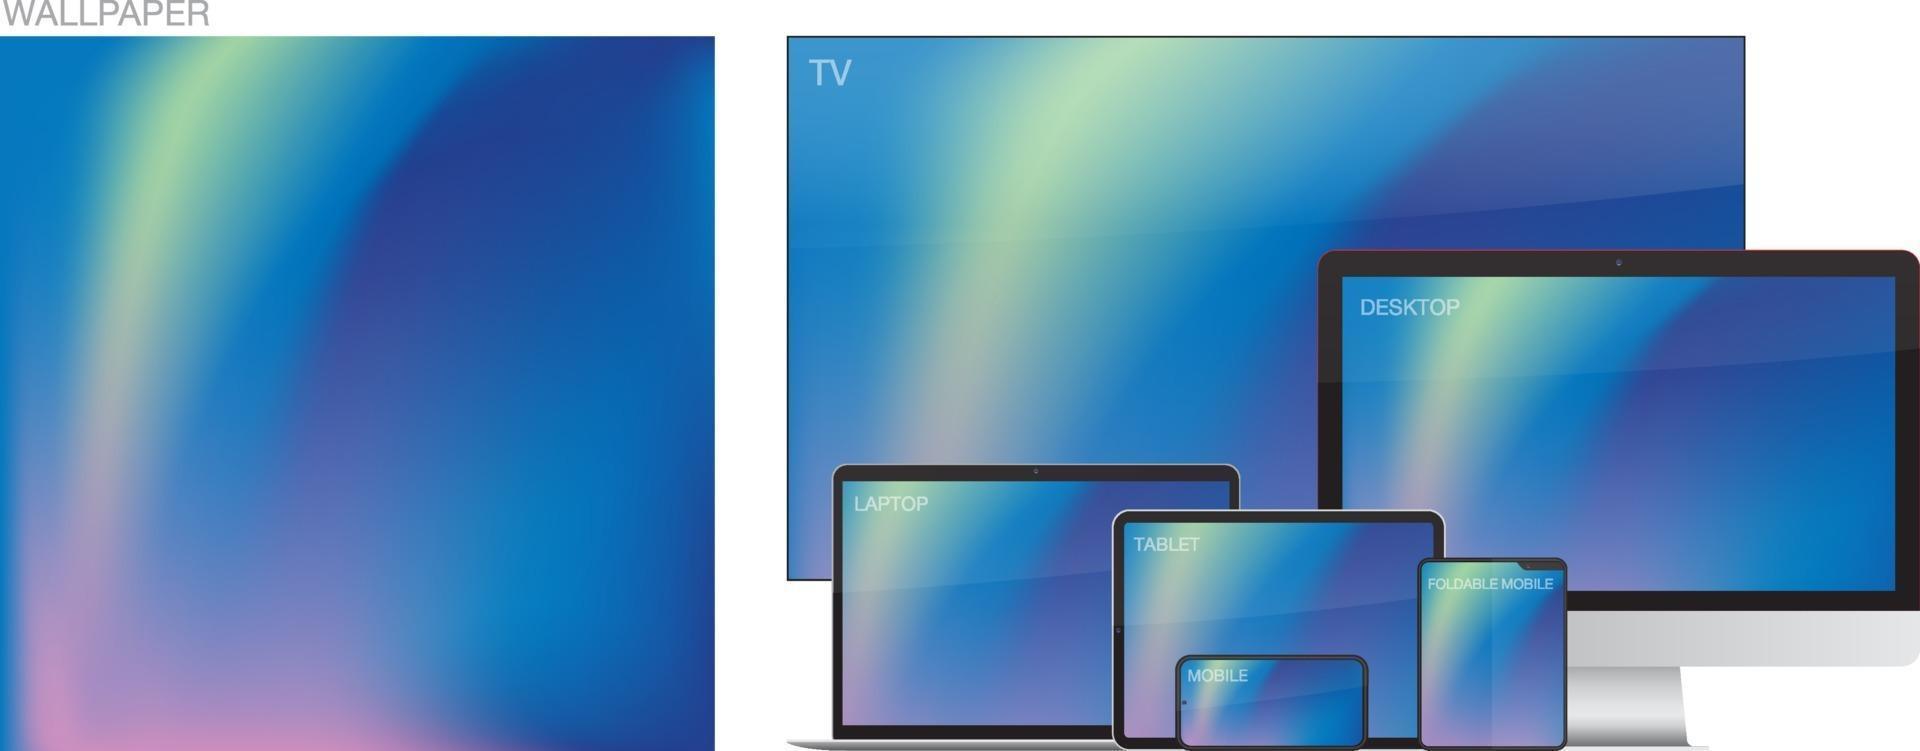 papel de parede para smartphone tablet laptop desktop computador ou tv vetor